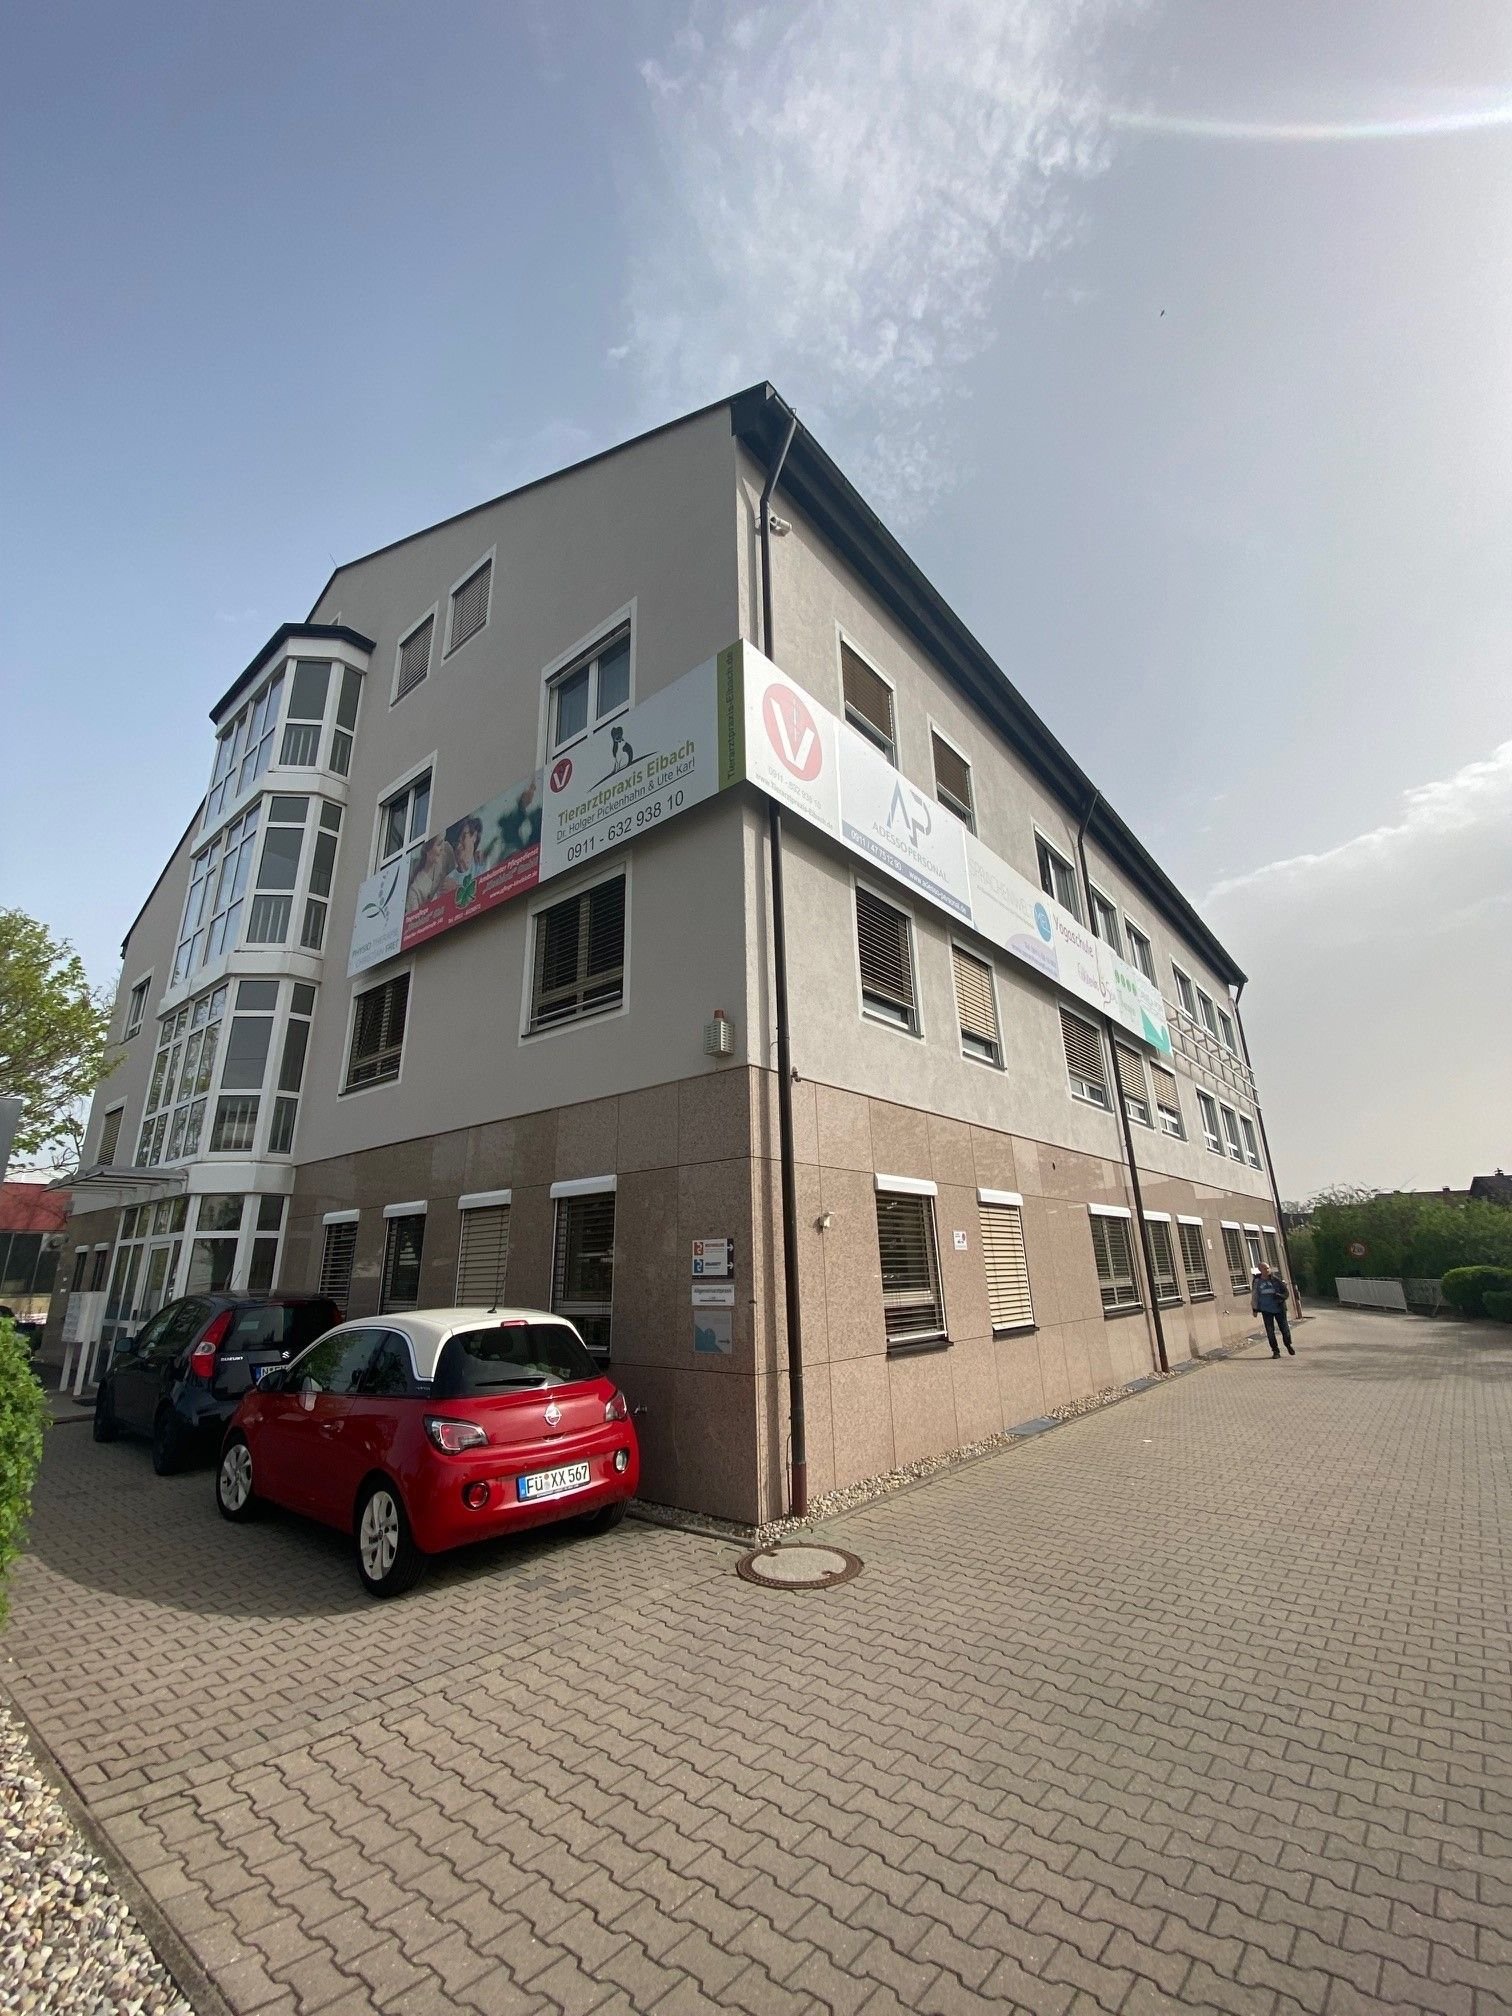 Praxisfläche zur Miete Provisionsfrei 850 € 3 Zimmer 87 m² Bürofläche Eibacher Hauptstr. 141 a Eibach Nürnberg 90451